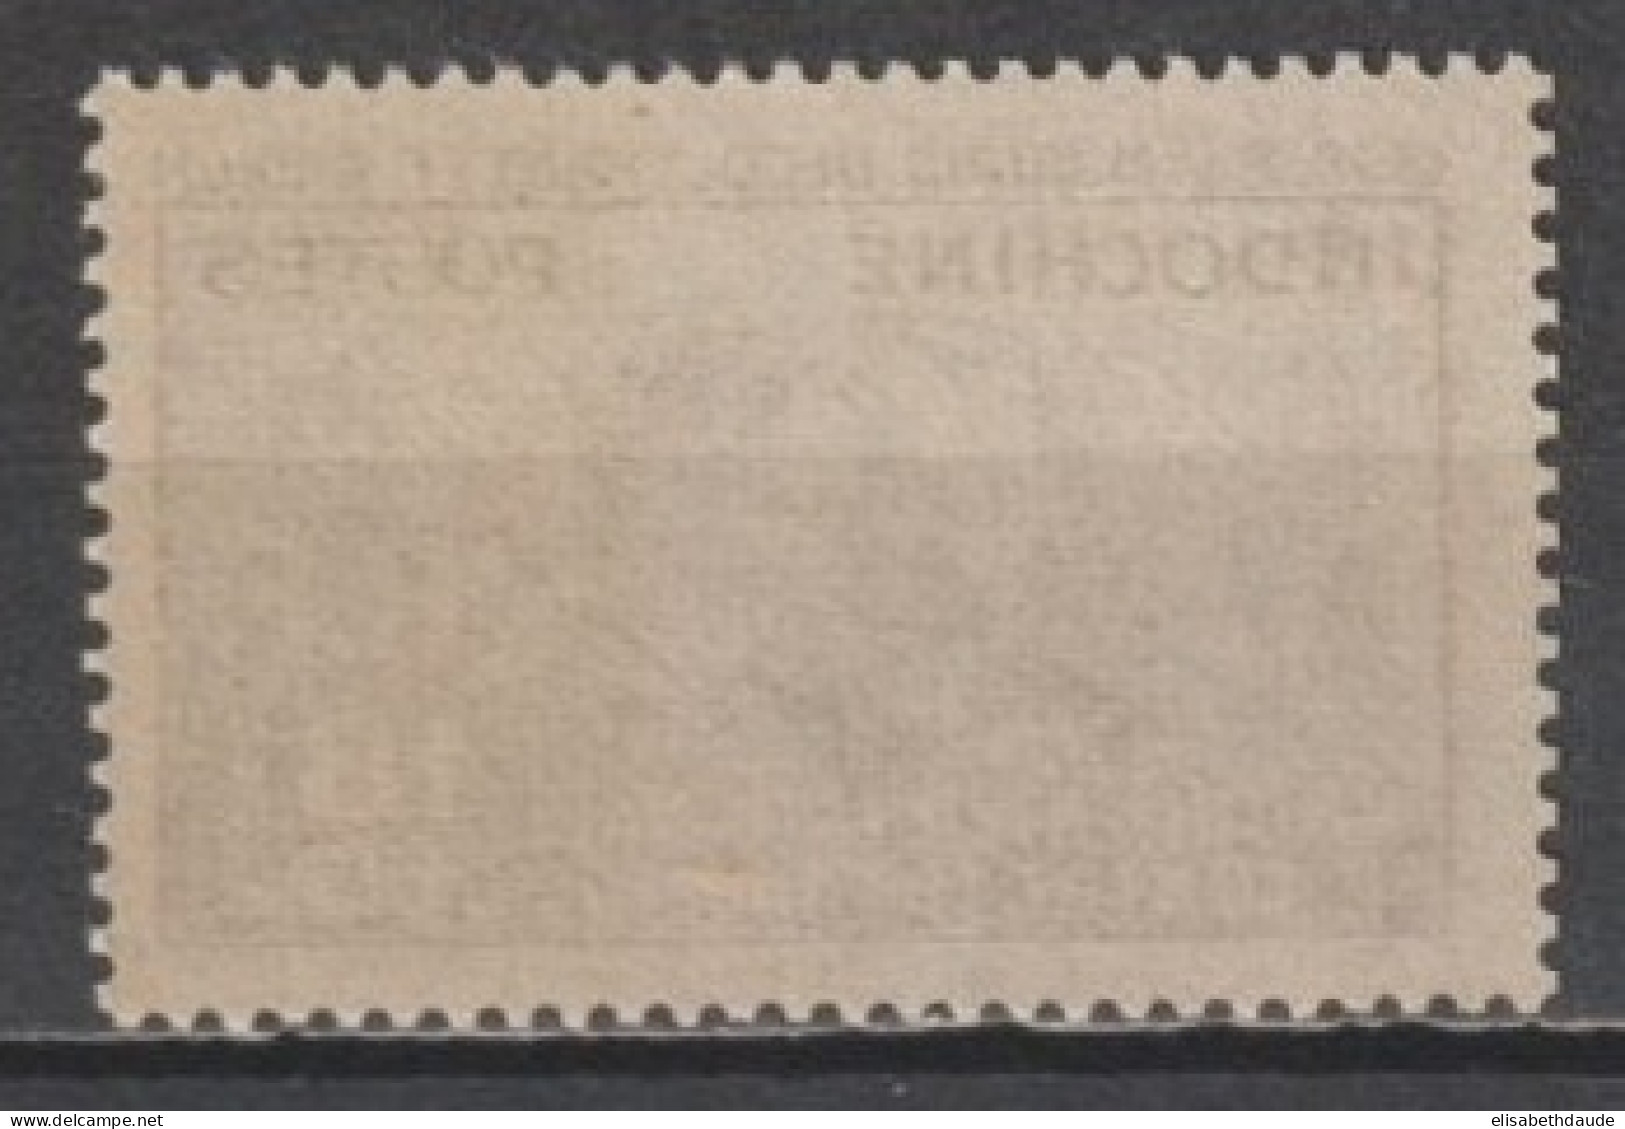 INDOCHINE - 1938 - YVERT N° 202 ** MNH - COTE = 30 EUR - Neufs